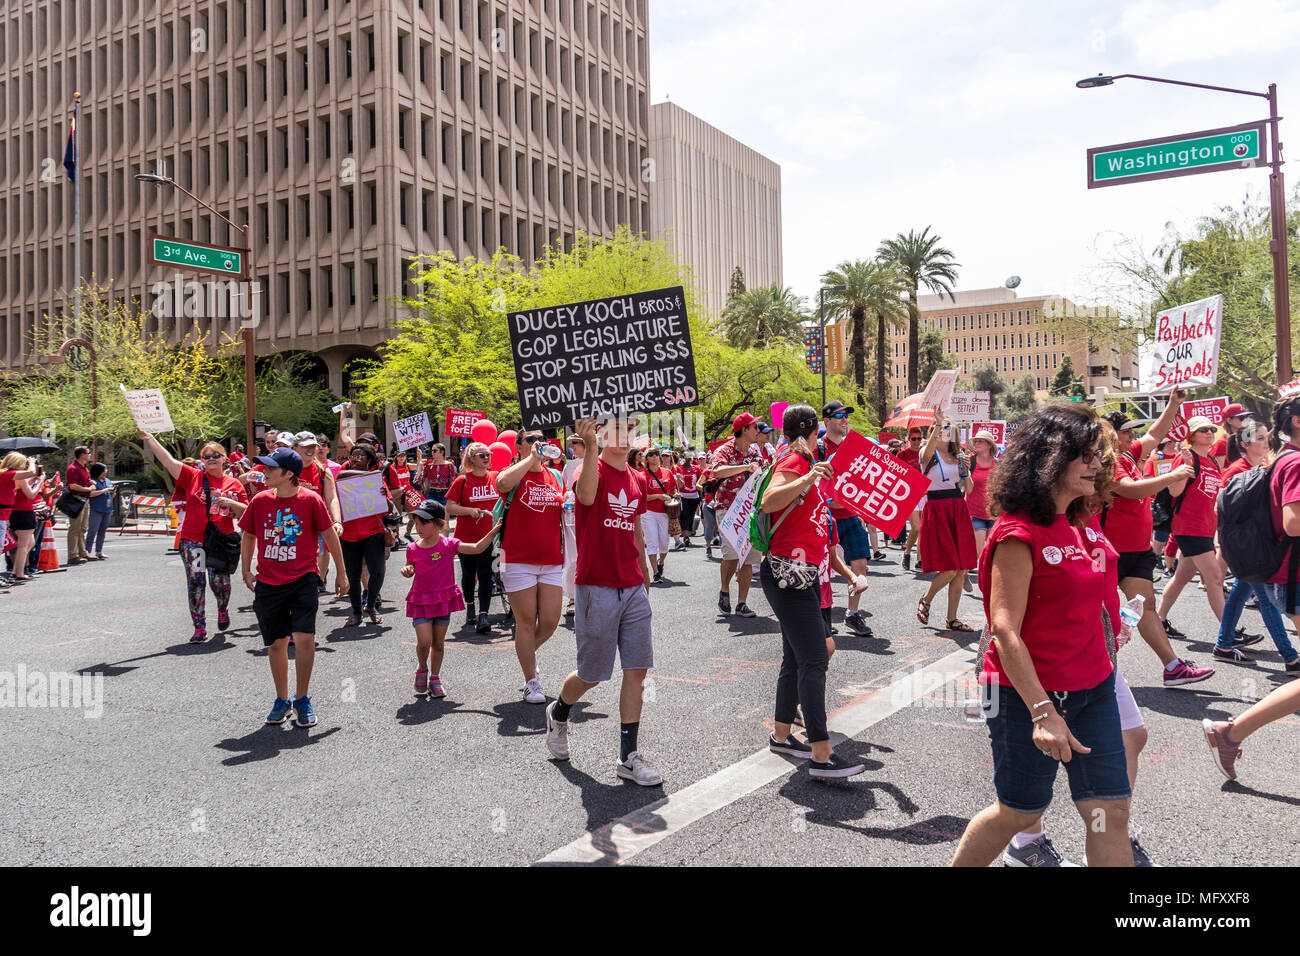 Phoenix, USA, 26 avril 2018, le n° RedForEd - Mars Ducey.Koch Bros. Crédit : Michelle Jones - Arizona/Alamy Live News. Banque D'Images